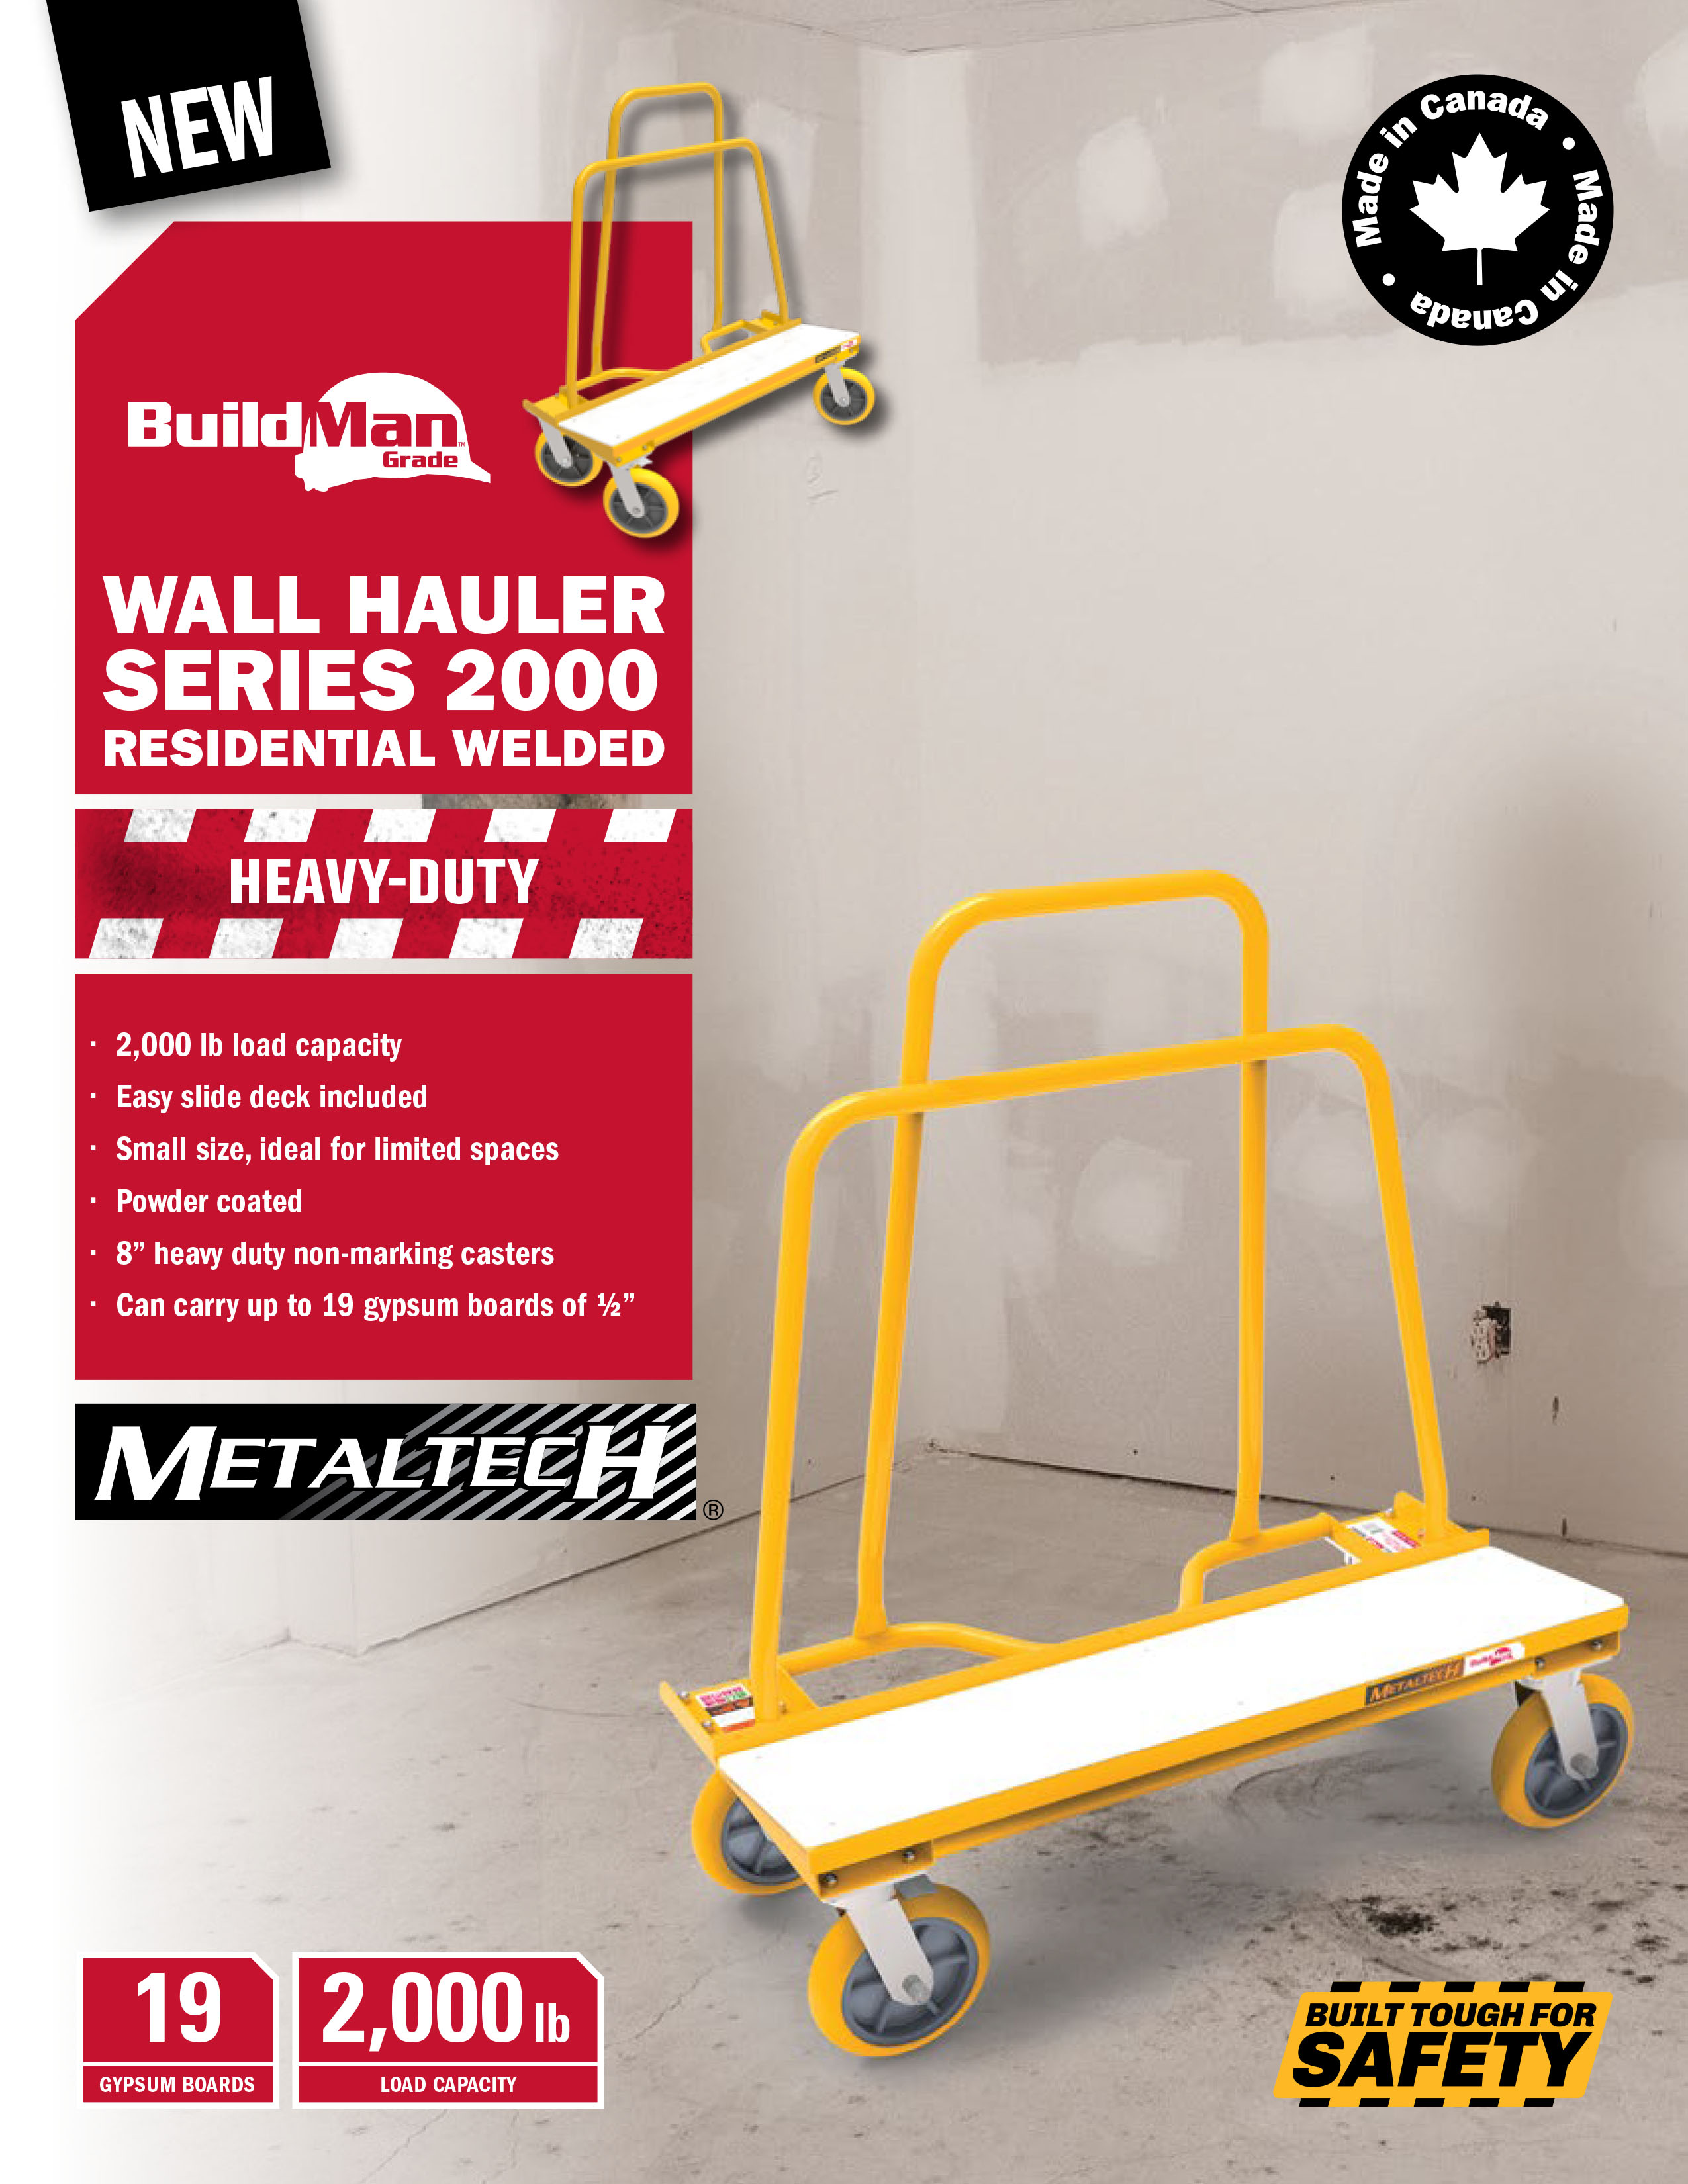 metaltech-wallhauler-series2000-residential-welded-1.jpg